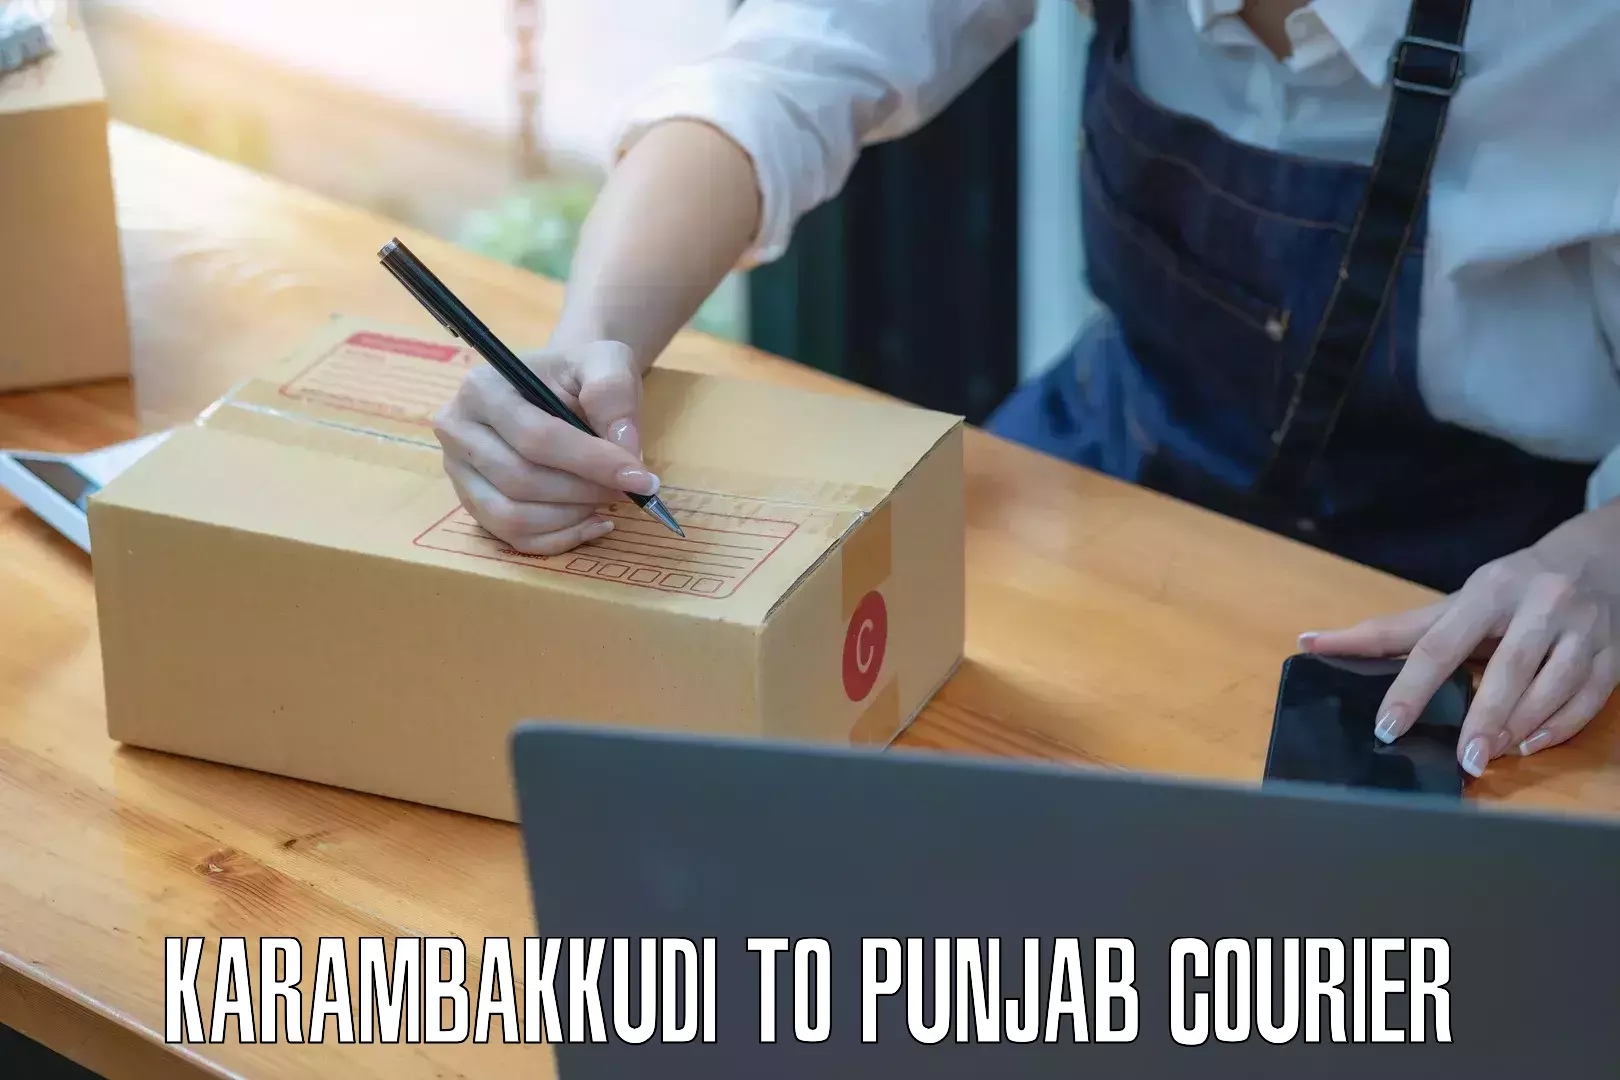 Courier service efficiency Karambakkudi to Pathankot